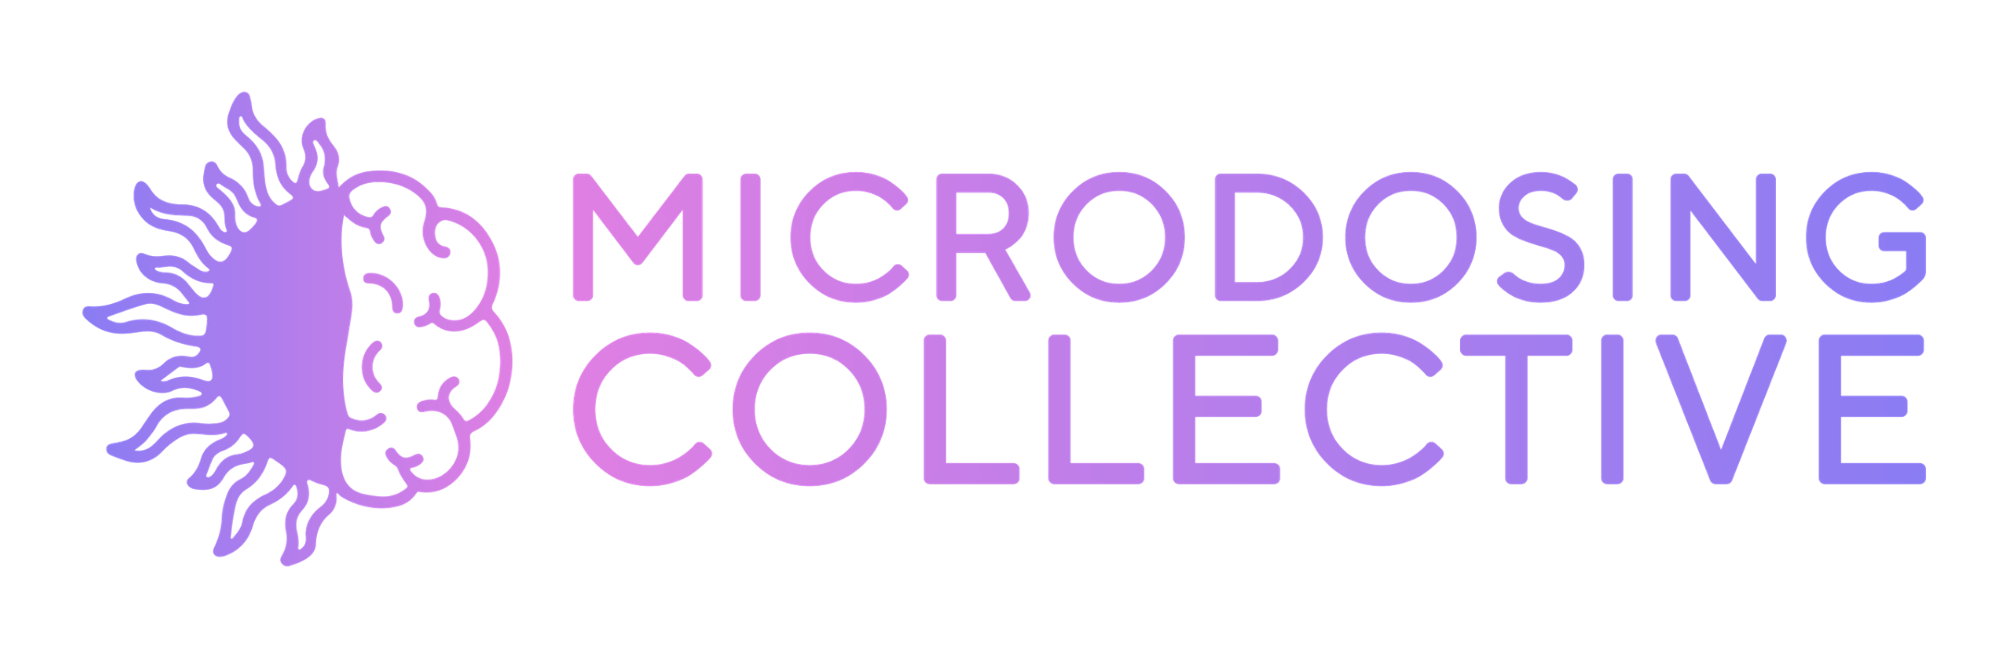 Microdosing Collective Logo Transparent.png